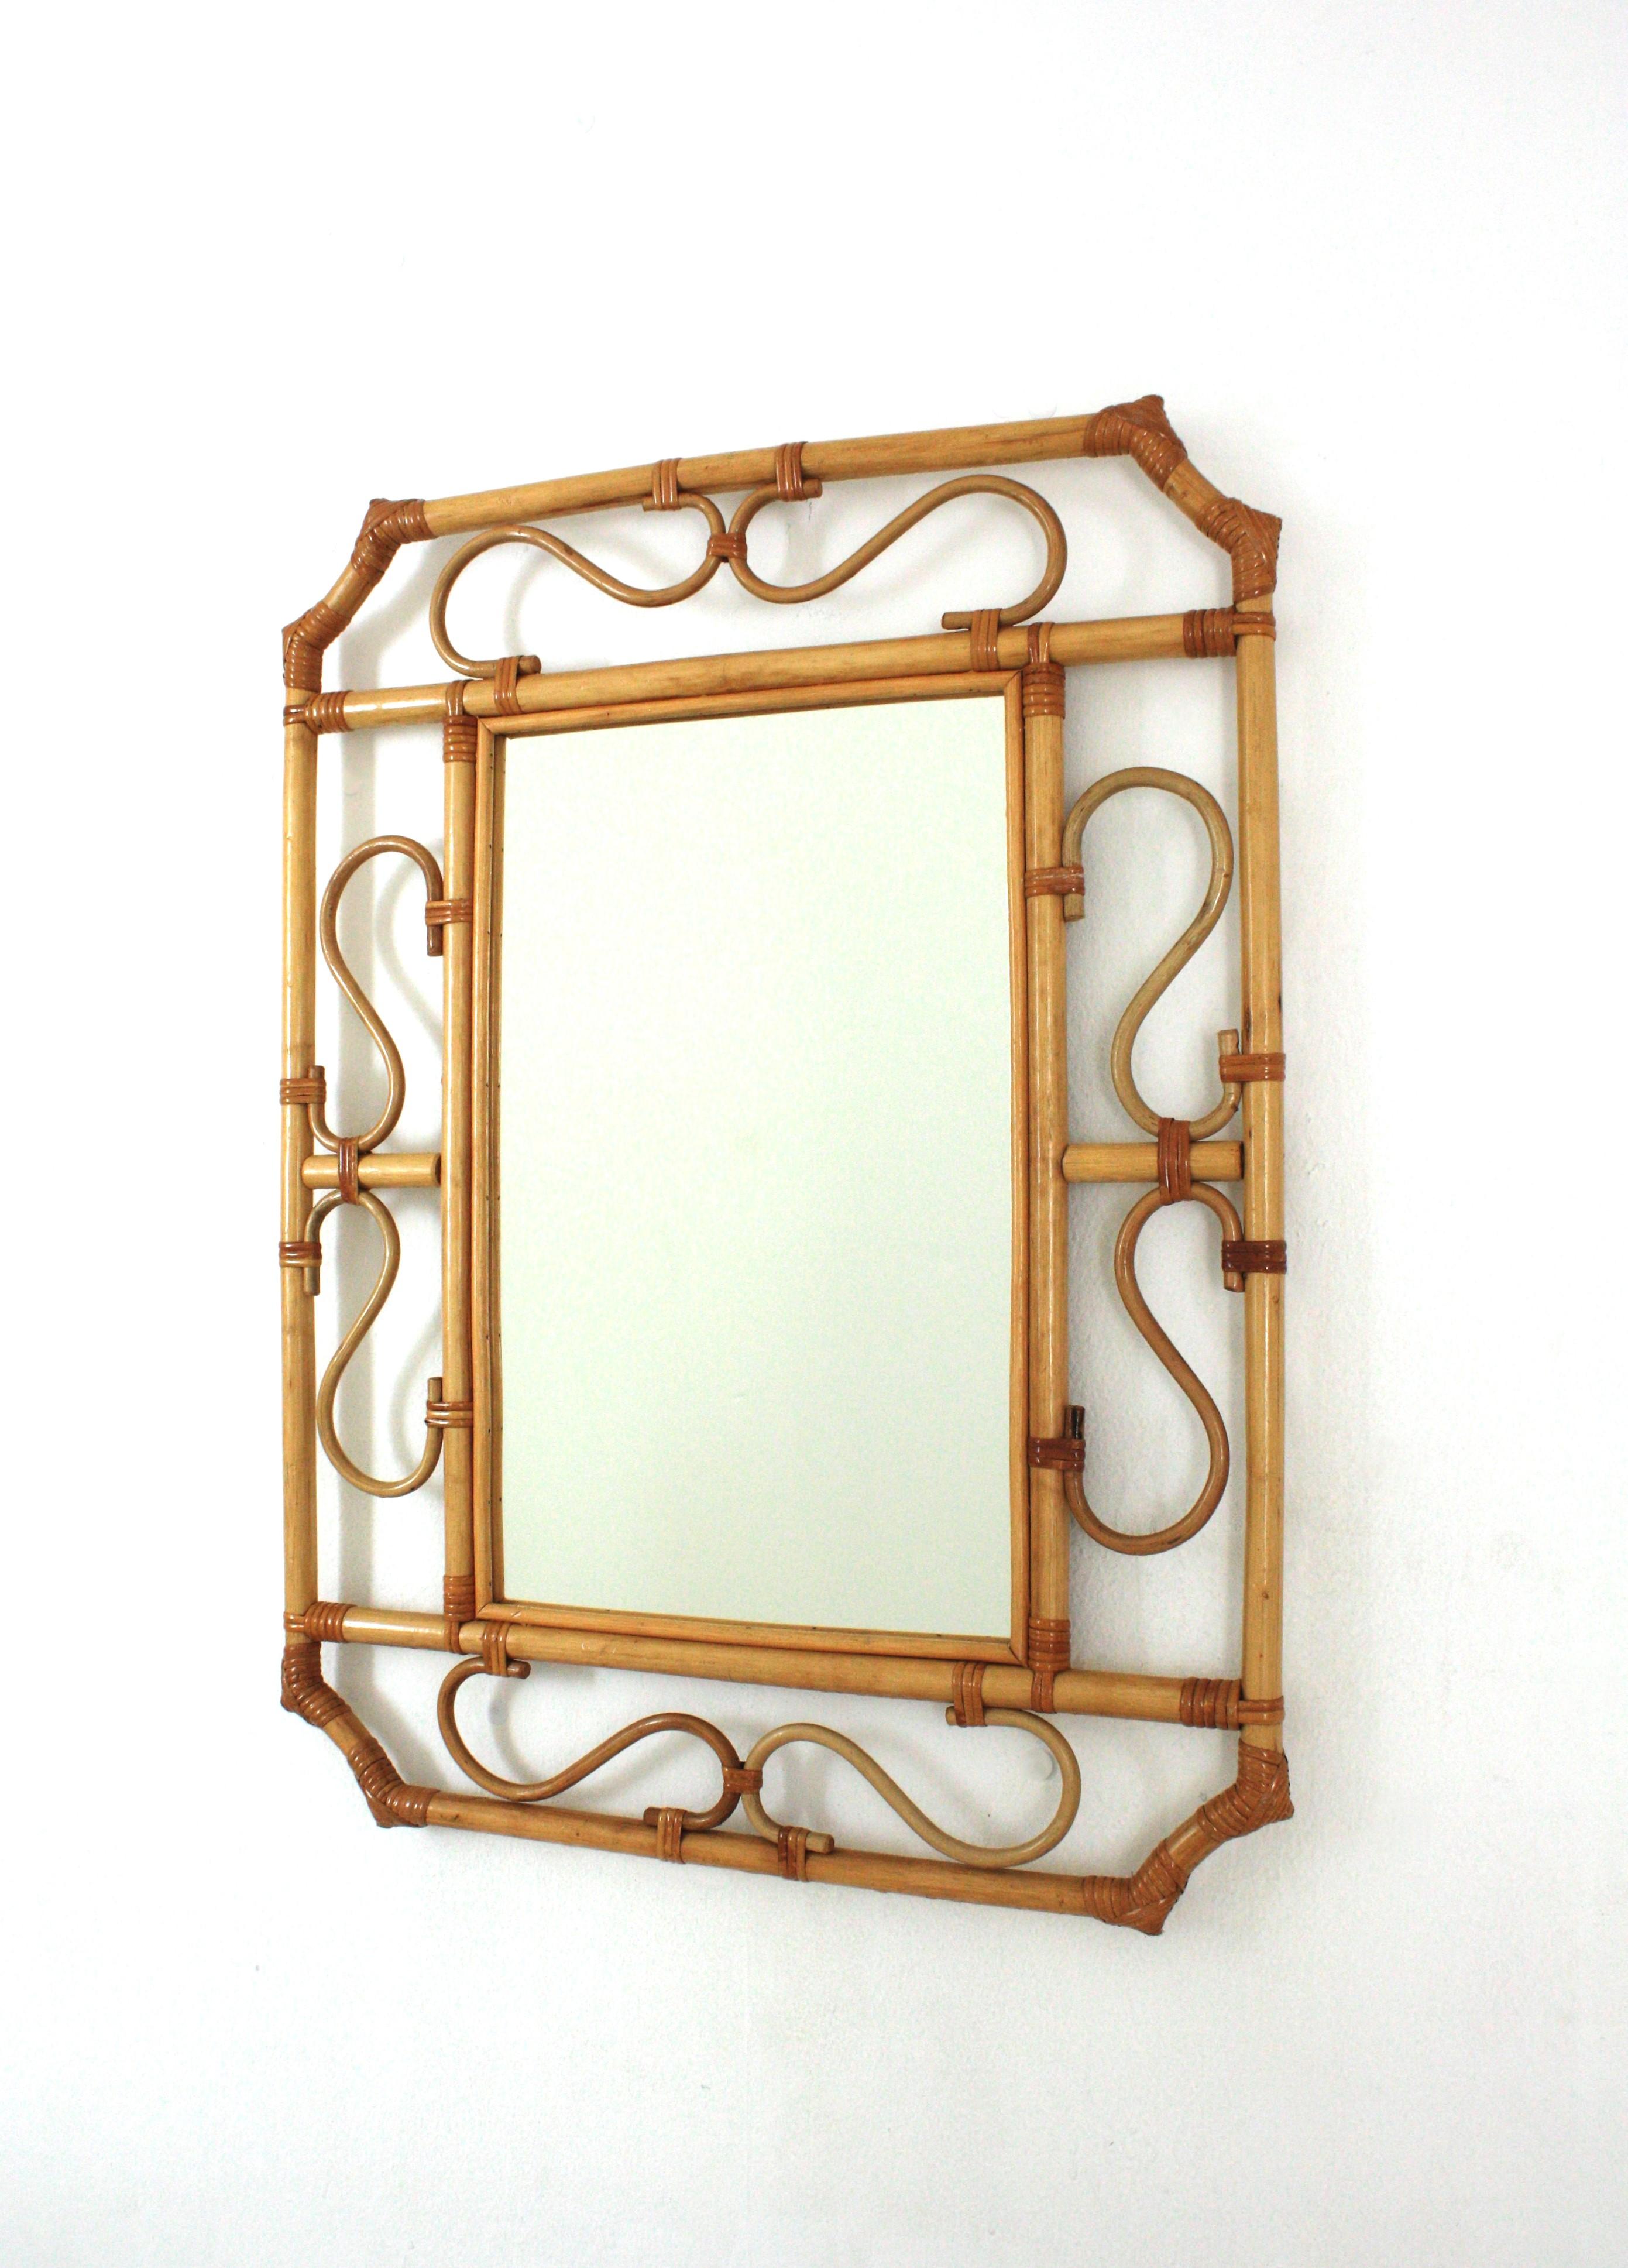 Franco Albini Style Rattan Octagonal Mirror, Italy, 1960s For Sale 2